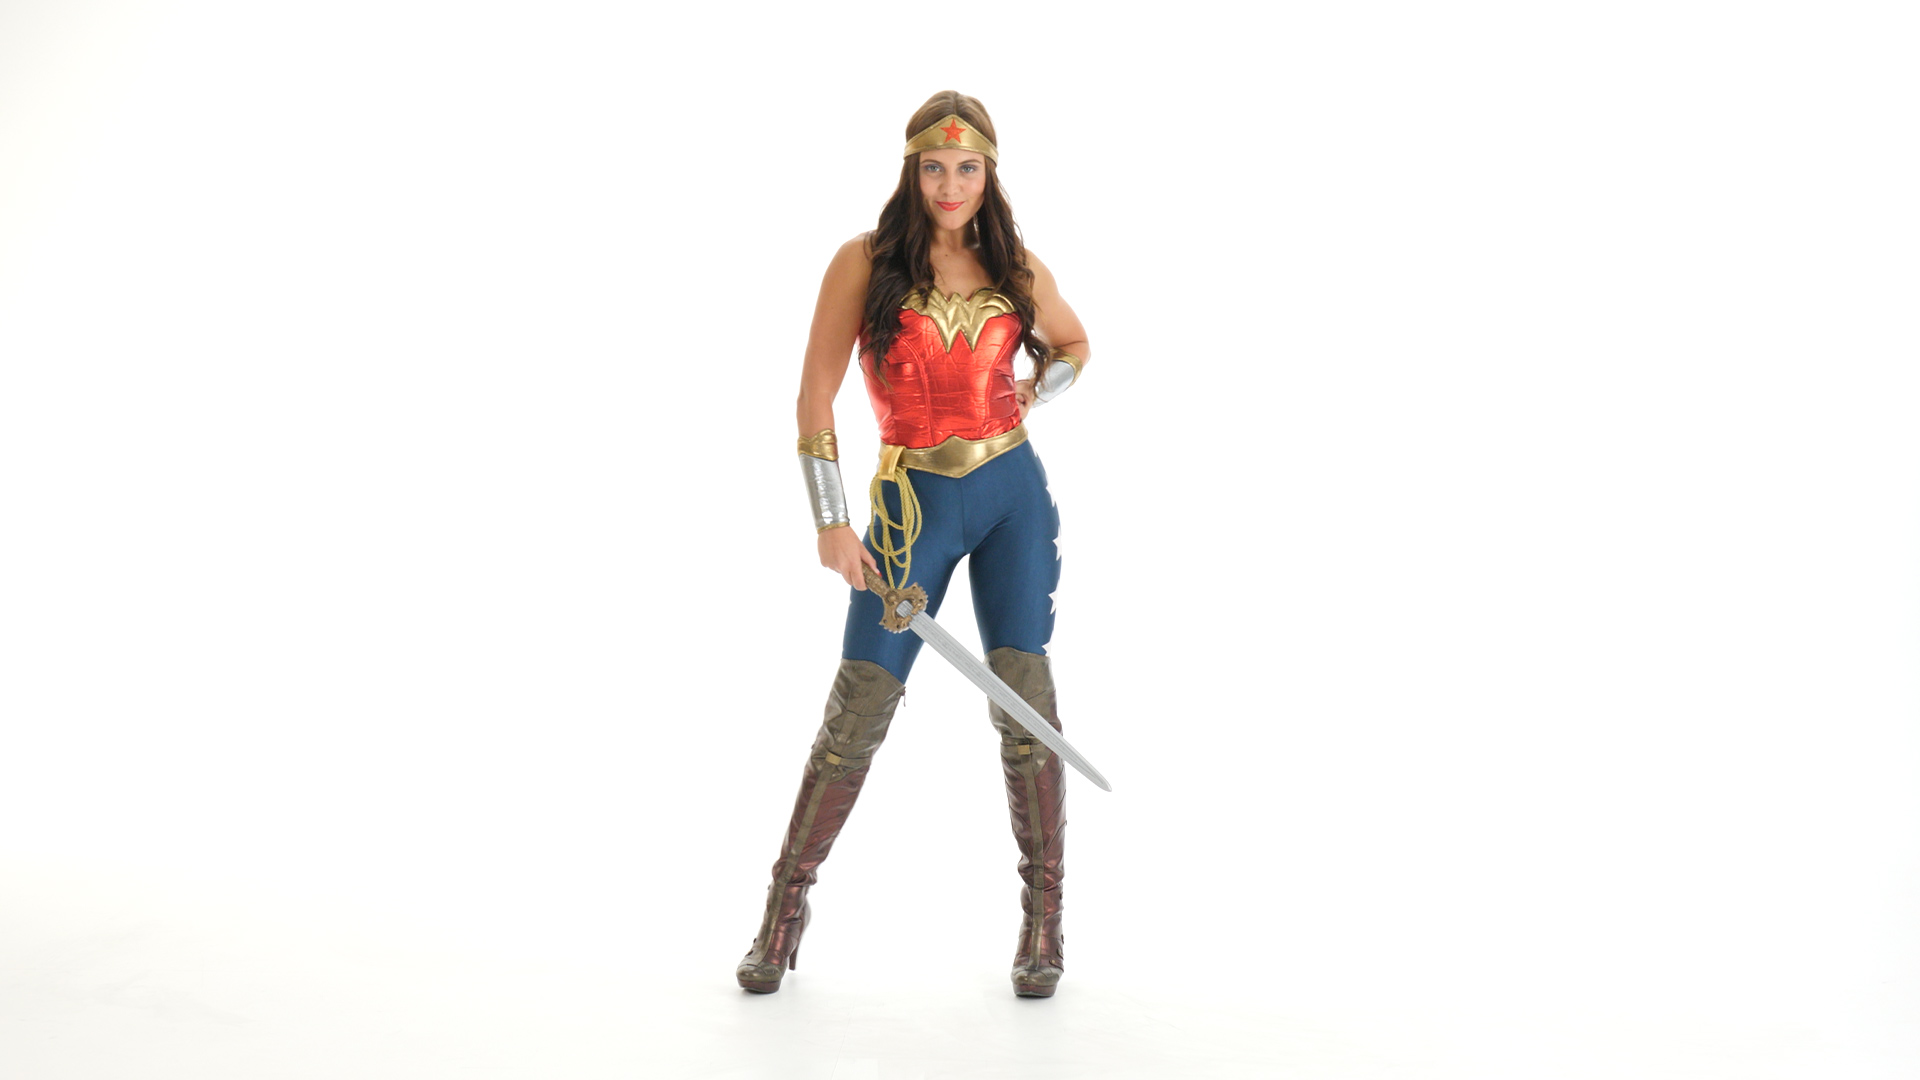 DC Wonder Woman Adult Costume